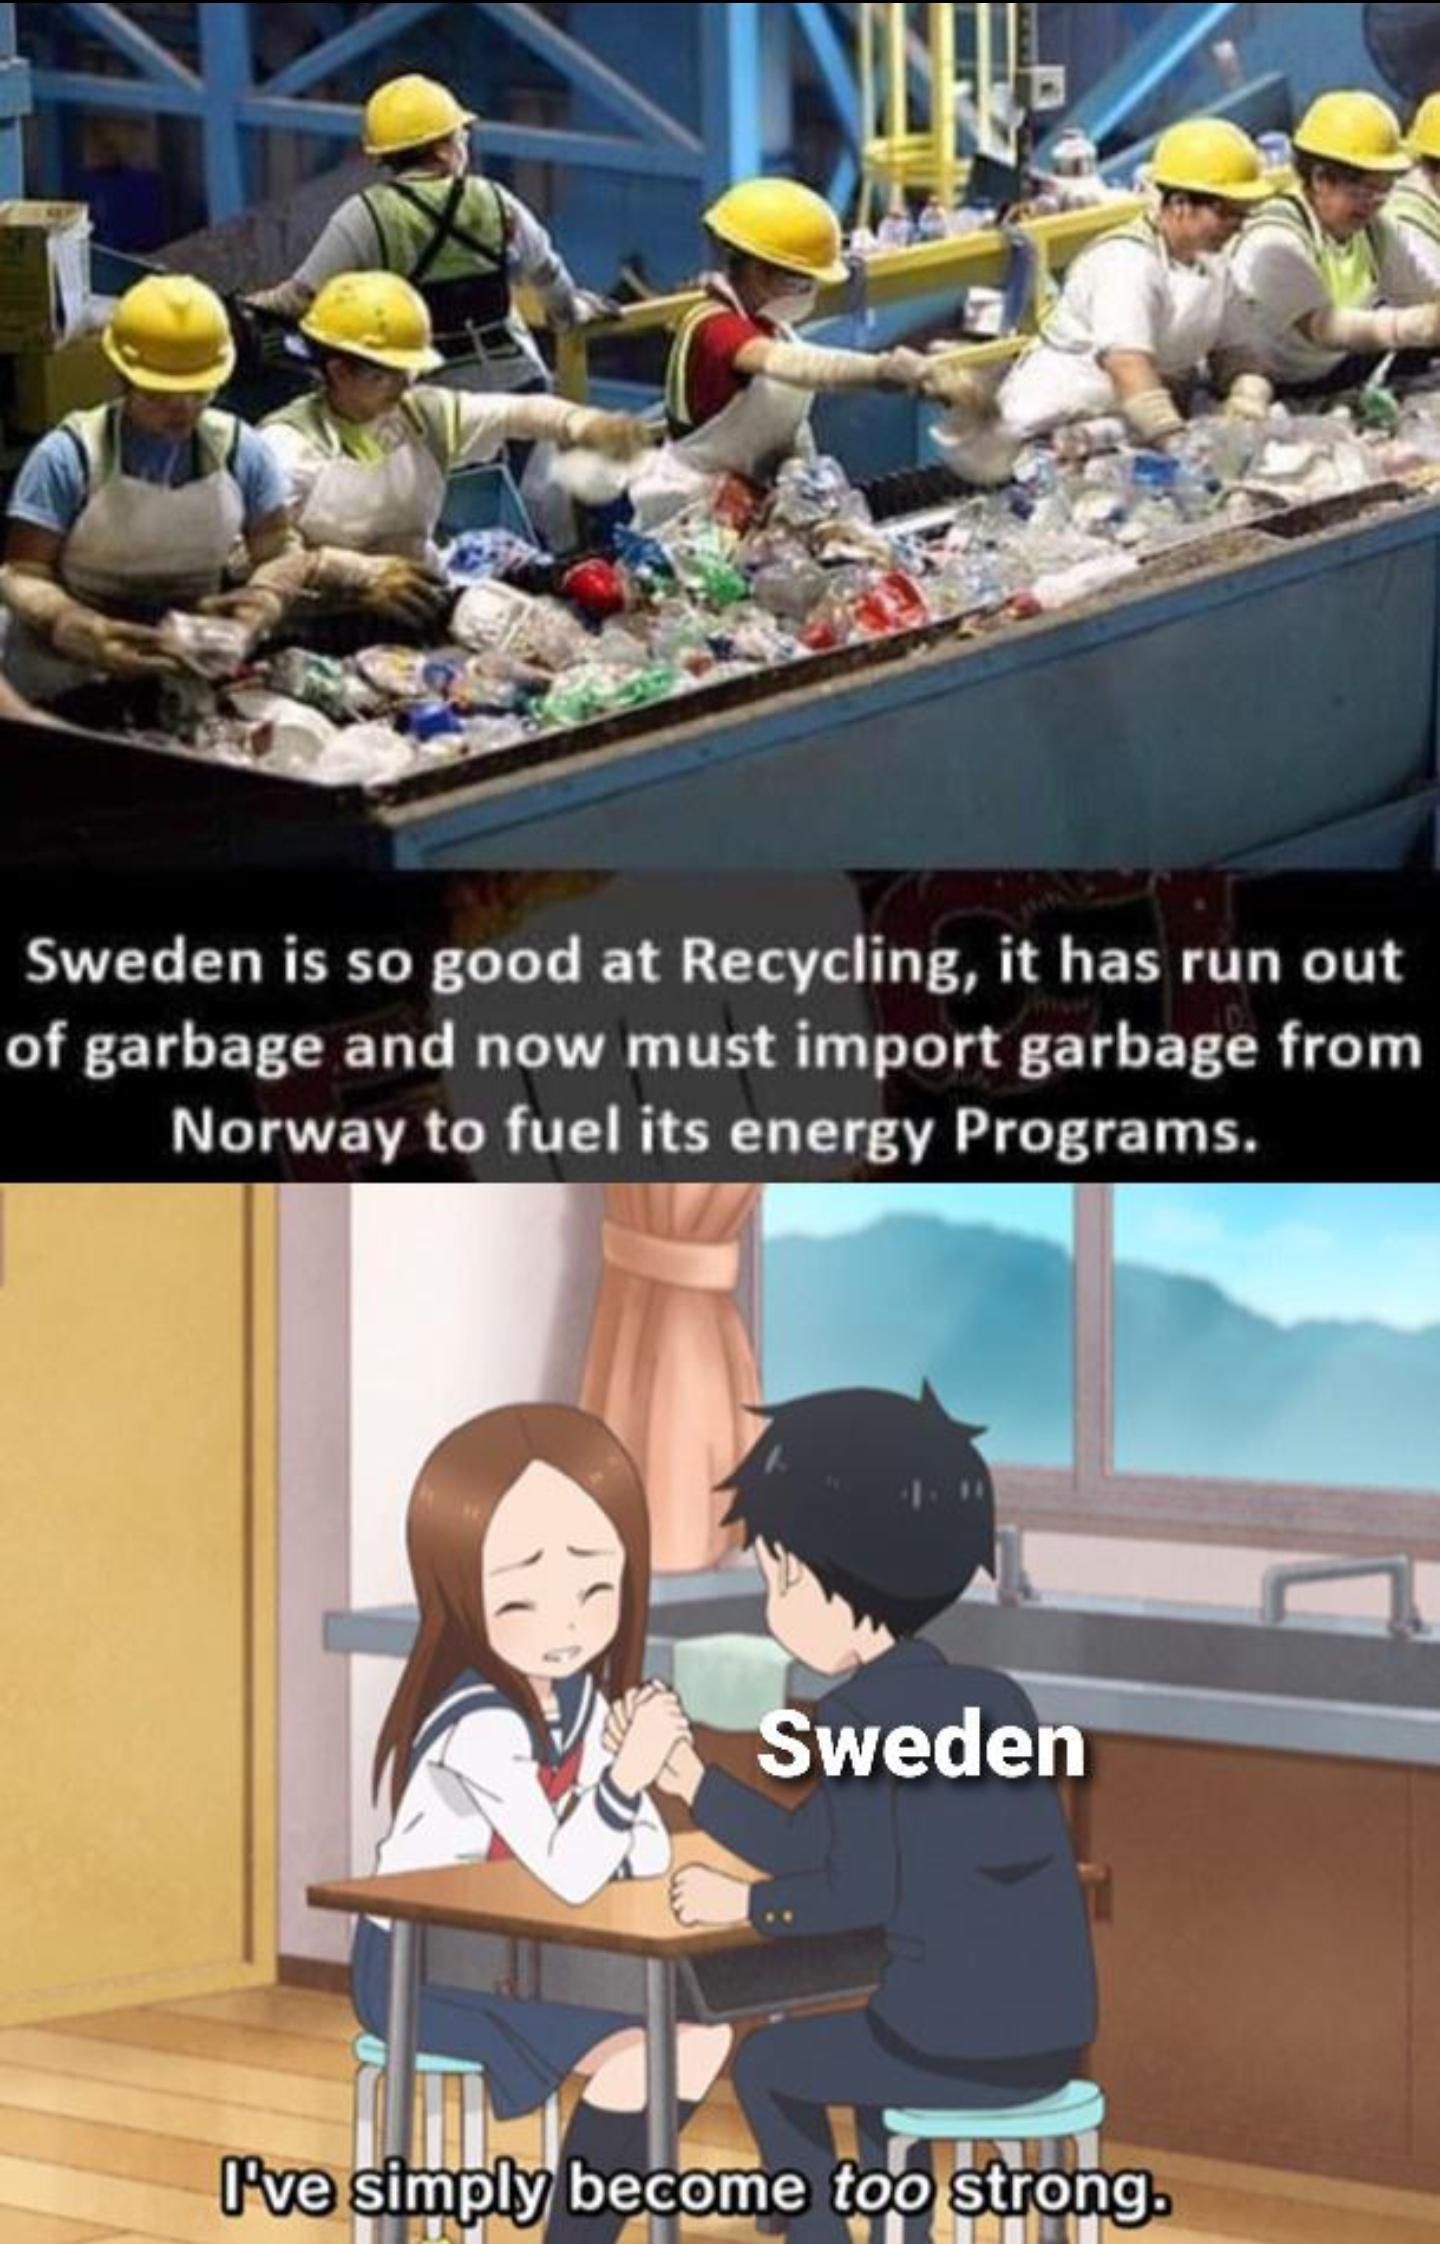 Need more garbage